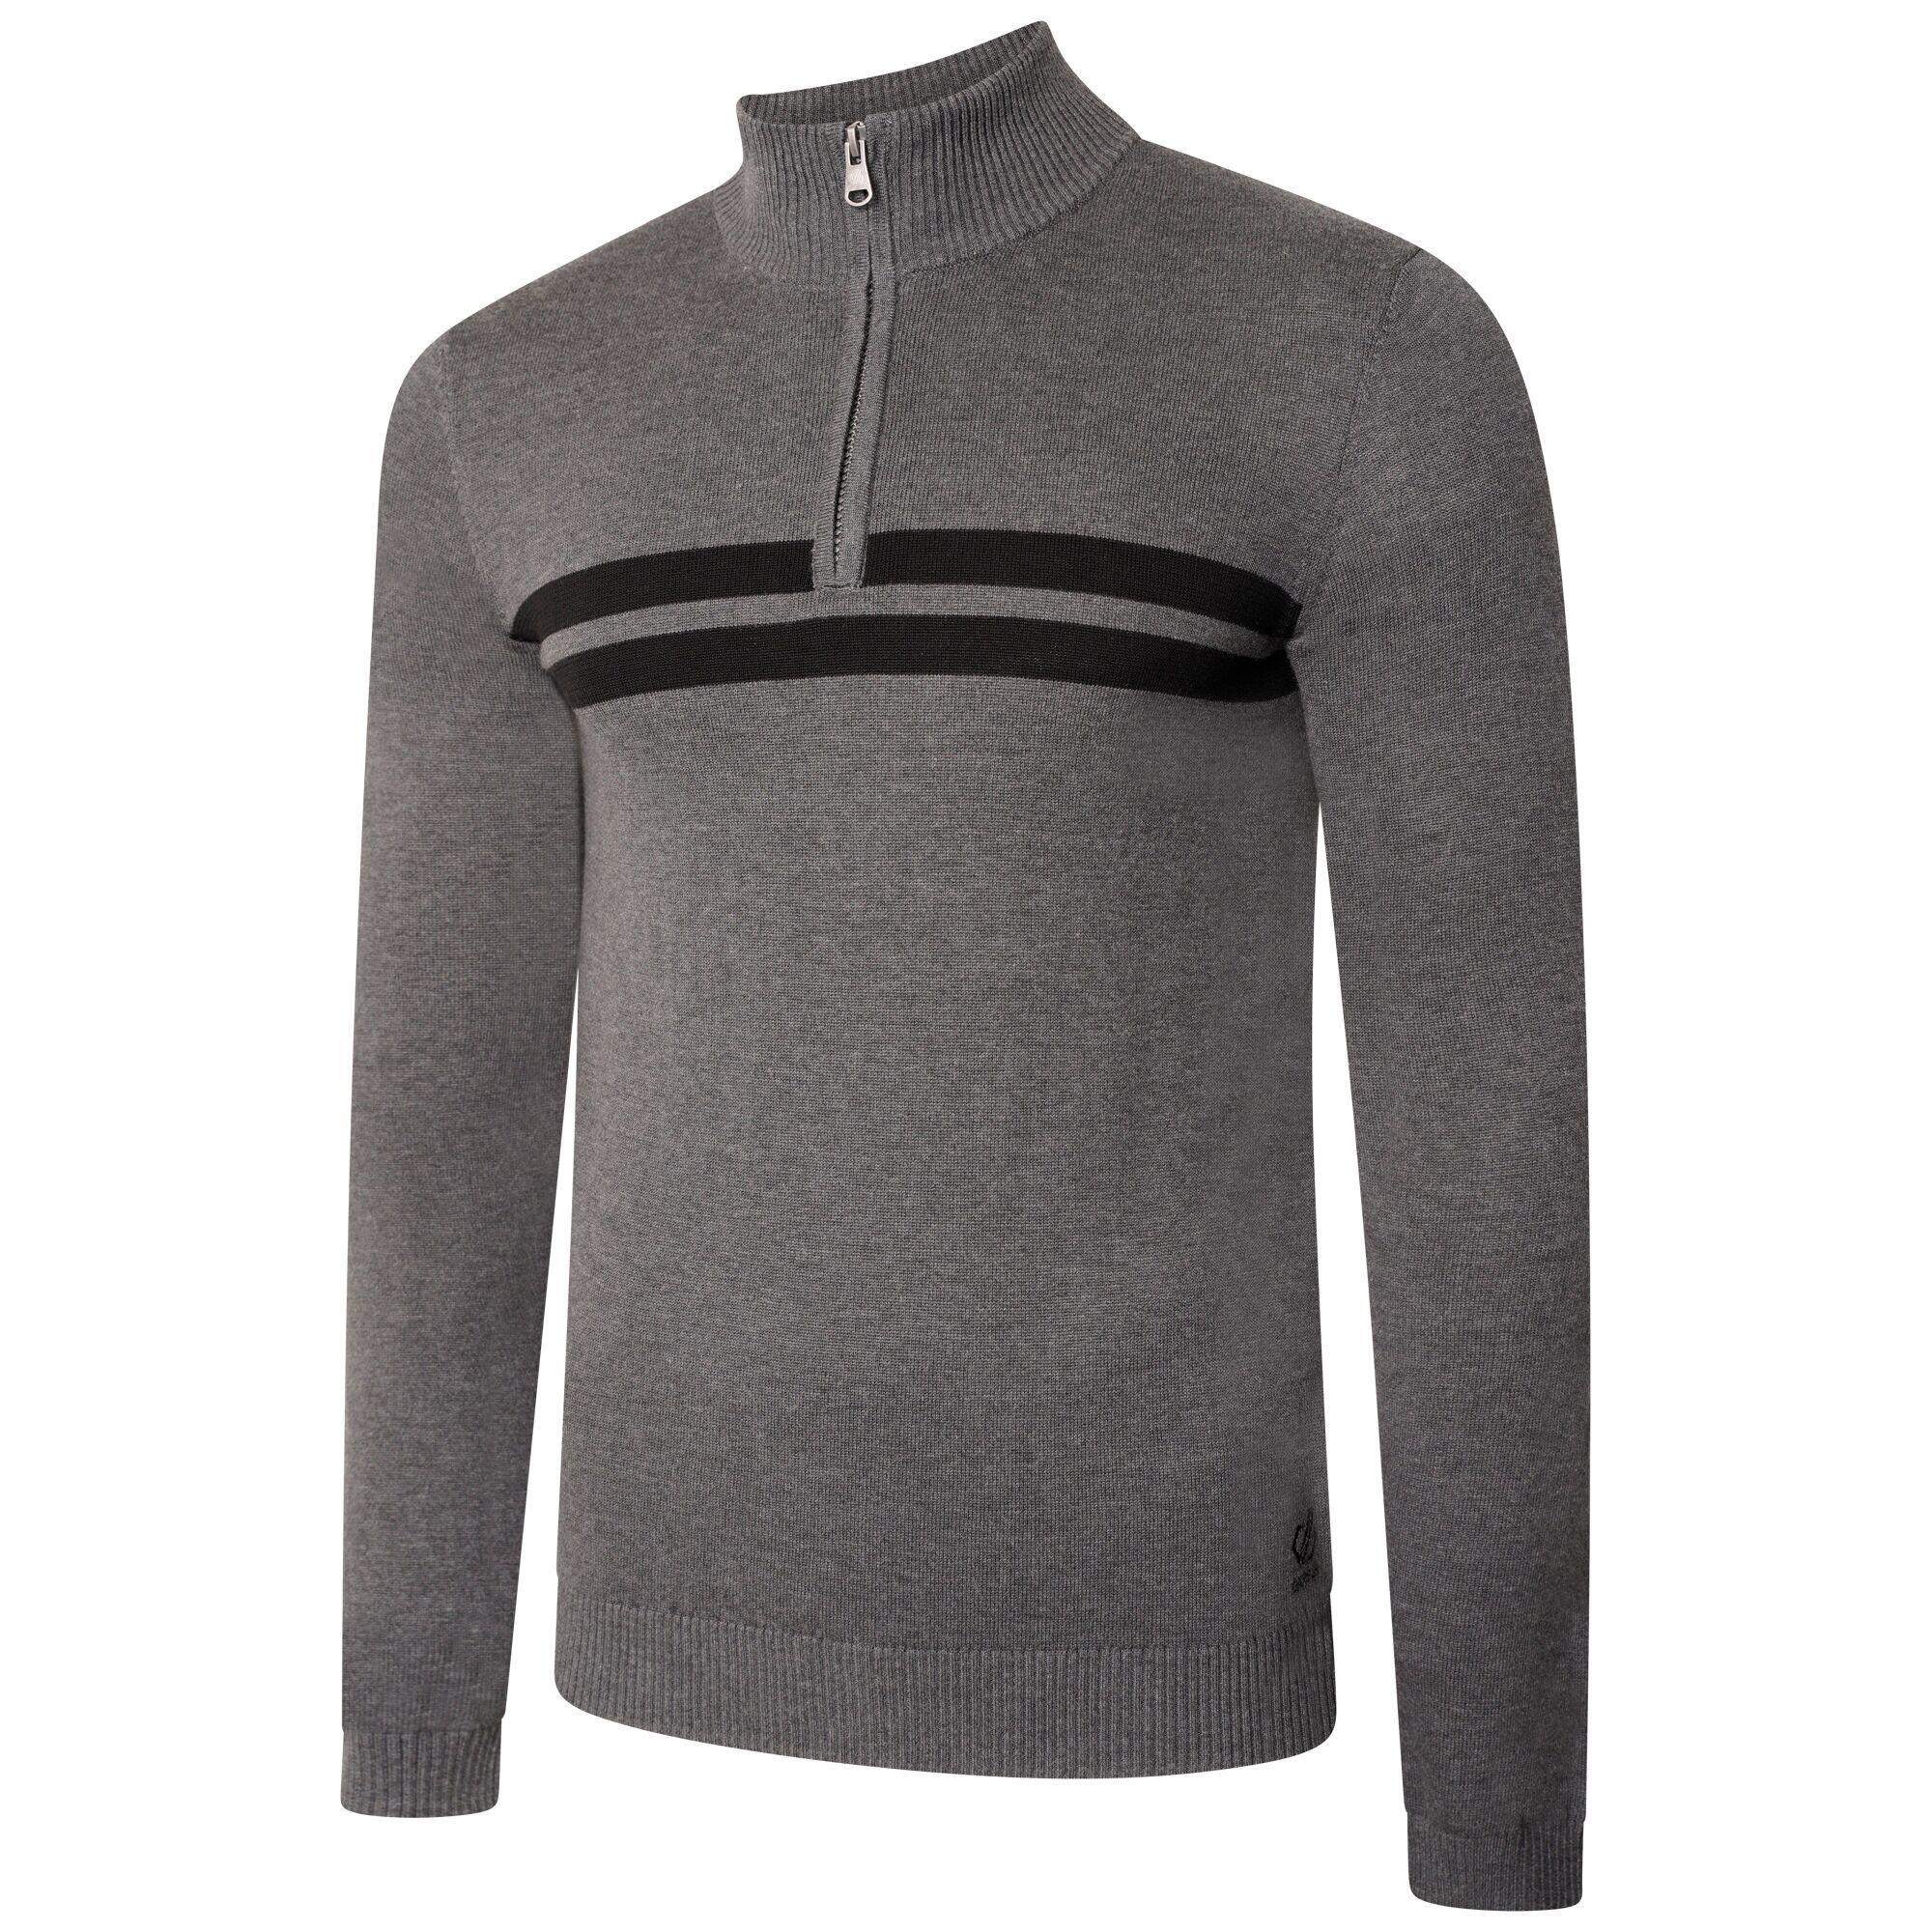 Mens Unite Us Knitted Half Zip Sweatshirt (Charcoal Grey/Black) 4/5